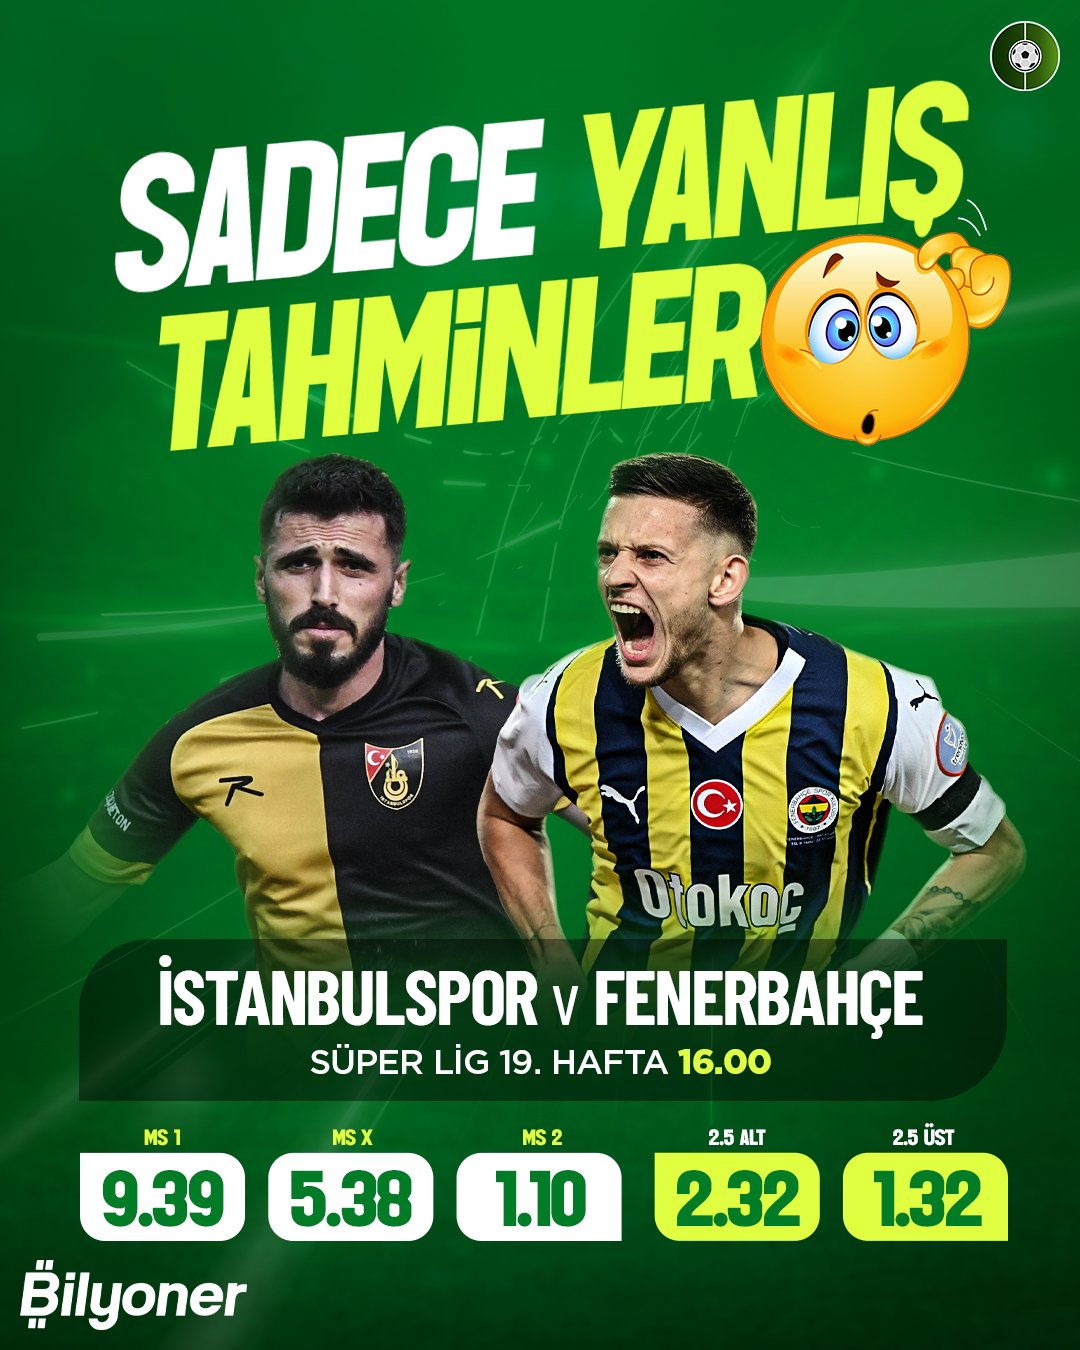 Fenerbahçe vs Galatasaray: The Legendary Rivalry